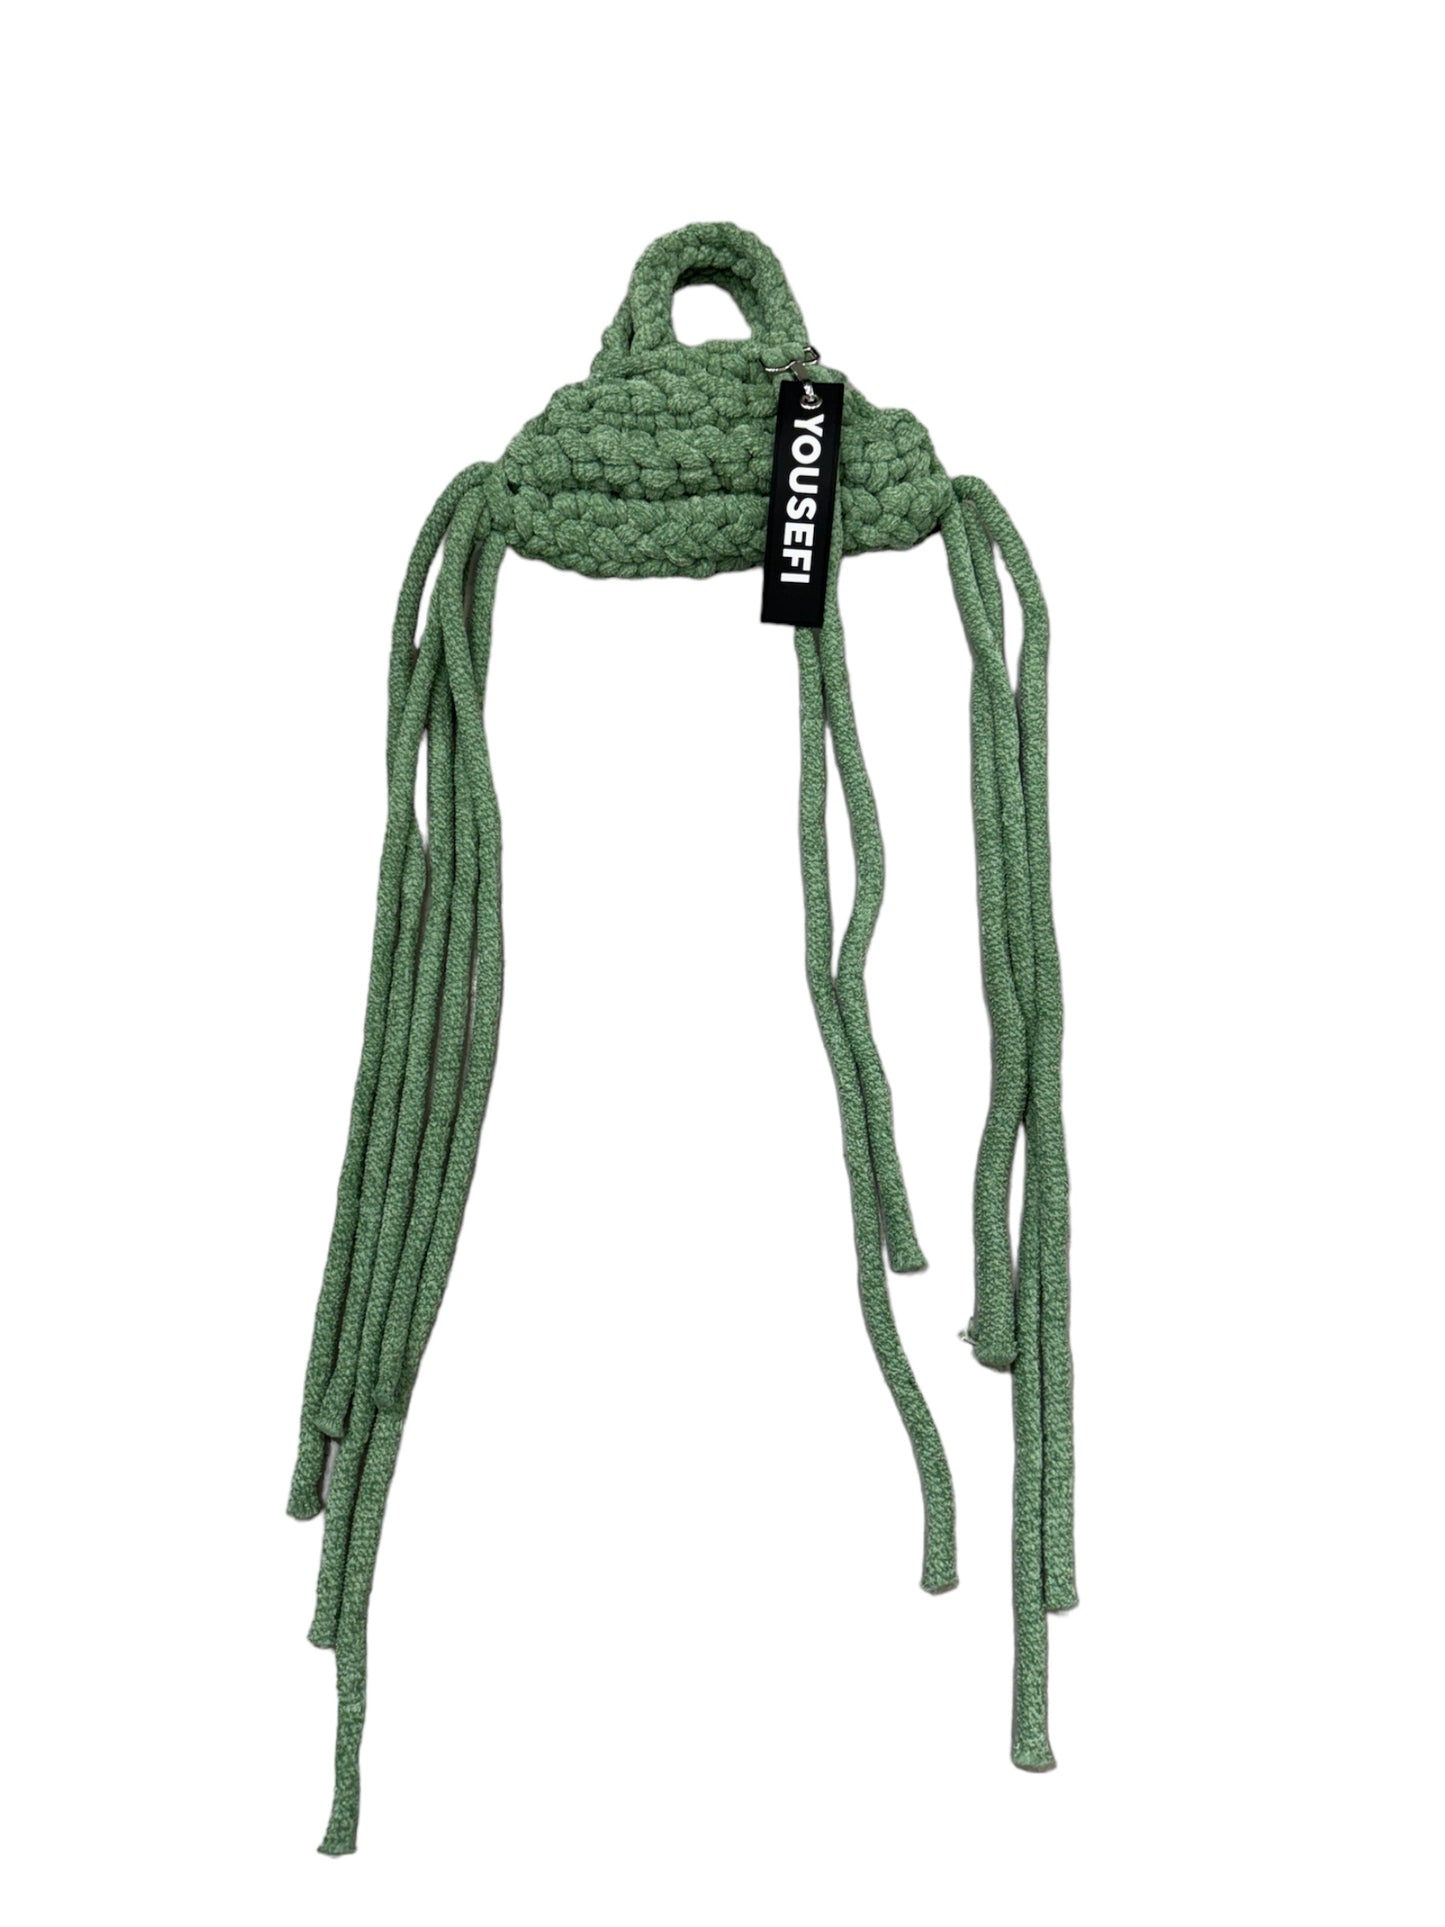 “MINAS” Crochet Bag